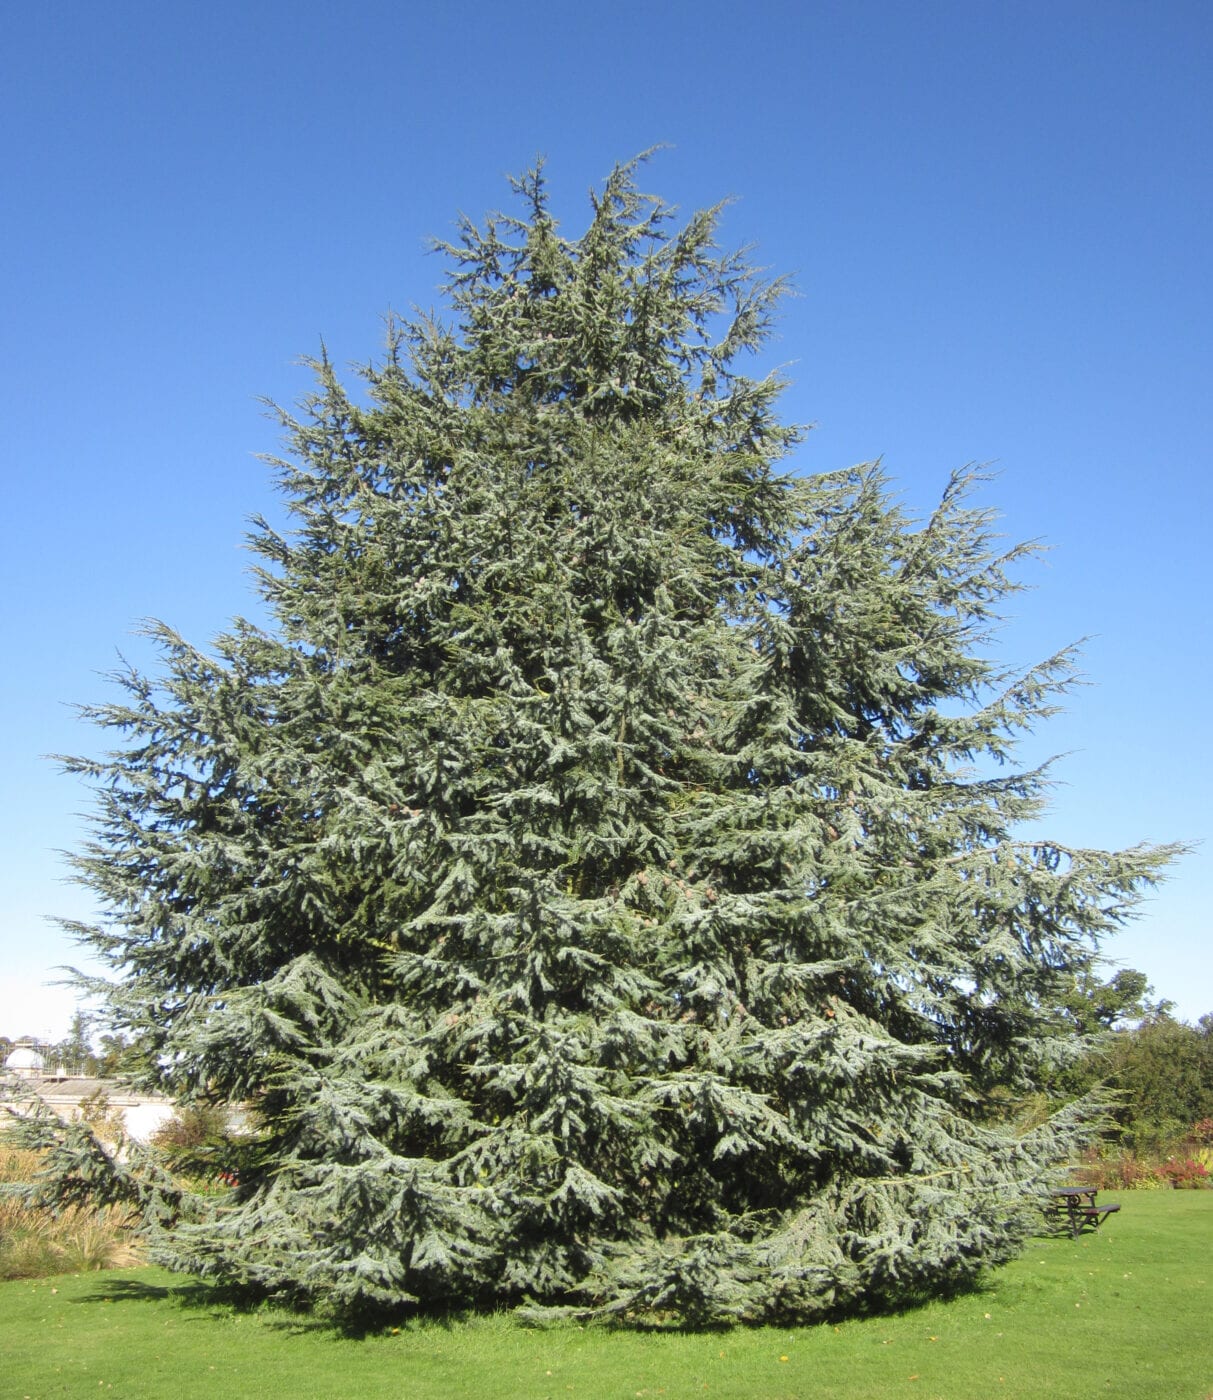 cedars - tree guide uk - cedar tree identification